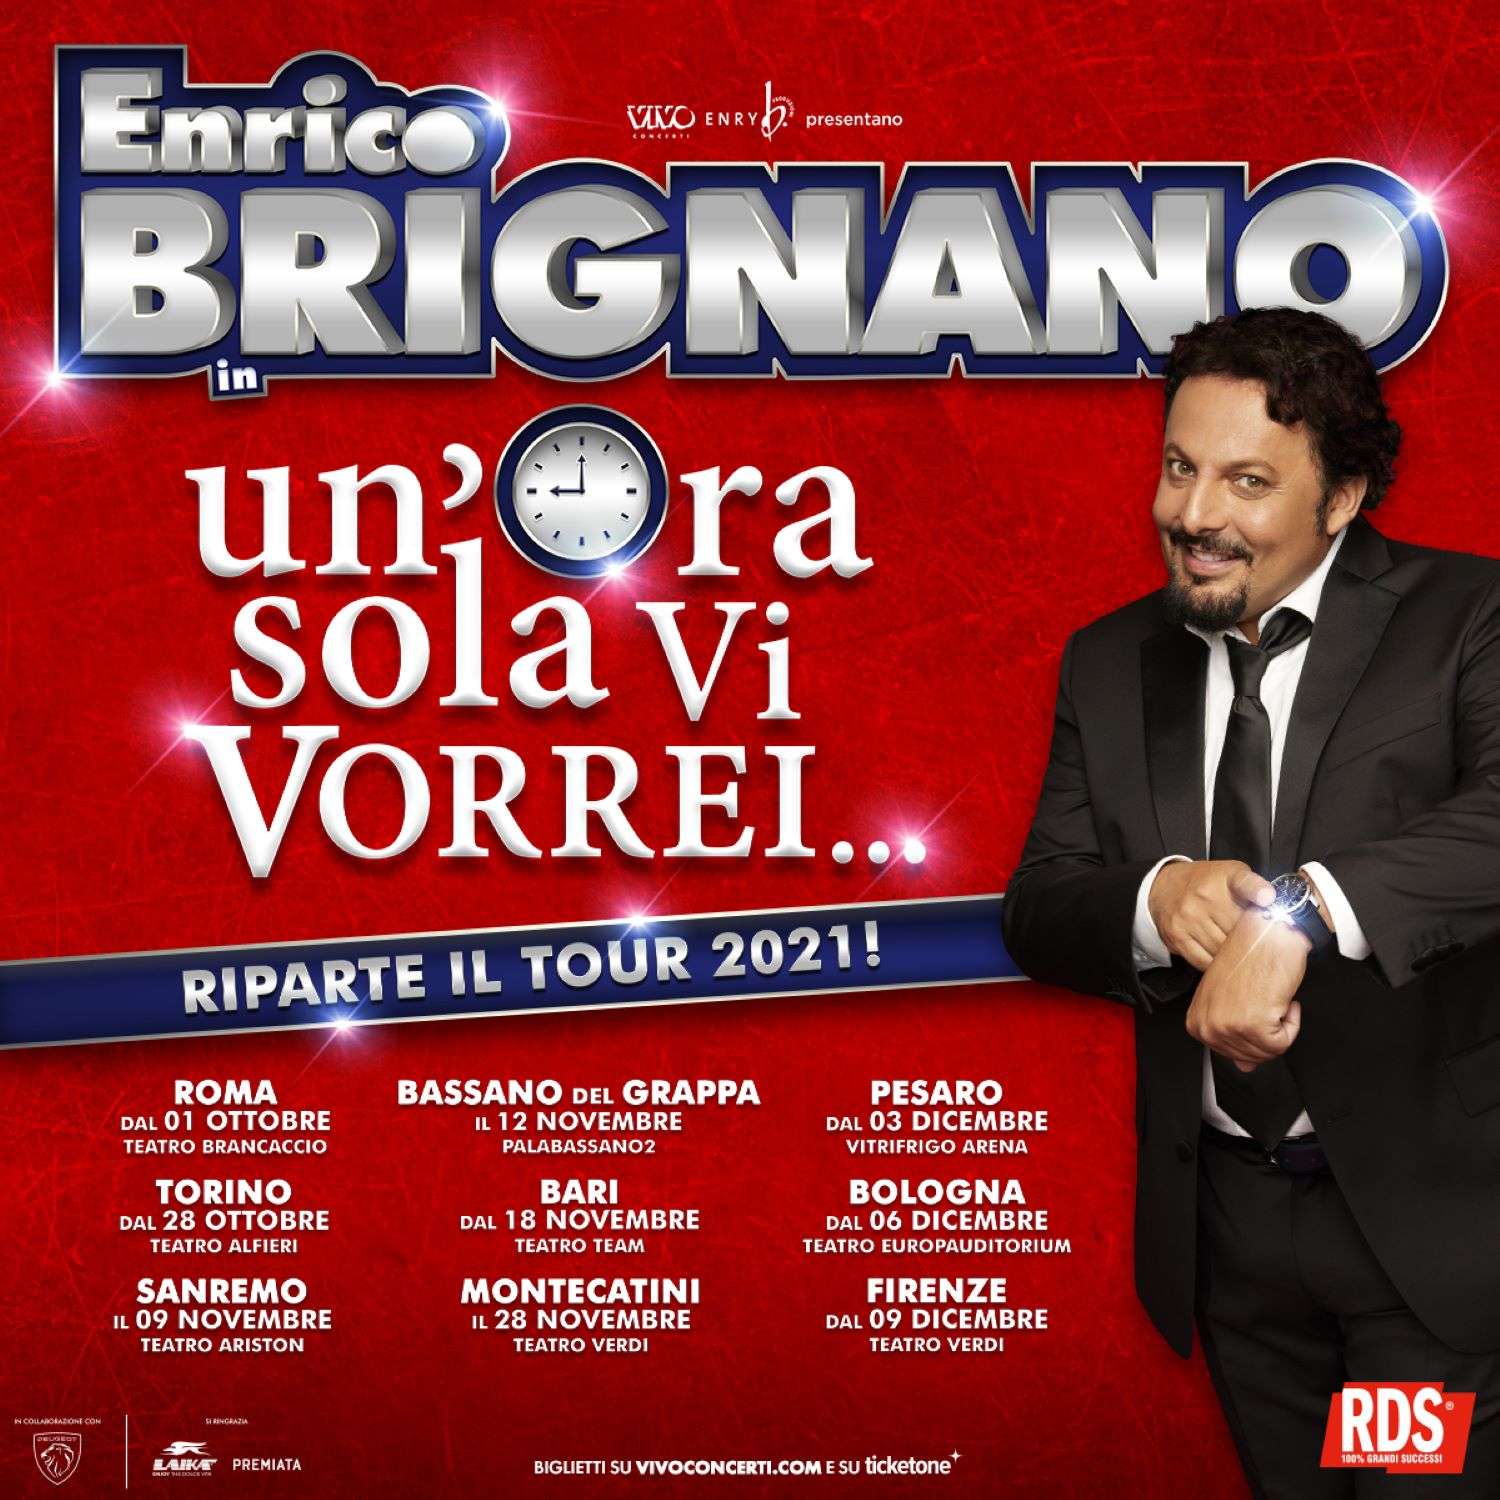 Enrico Brignano riapre il Teatro Alfieri con “Un’ora sola vi vorrei”